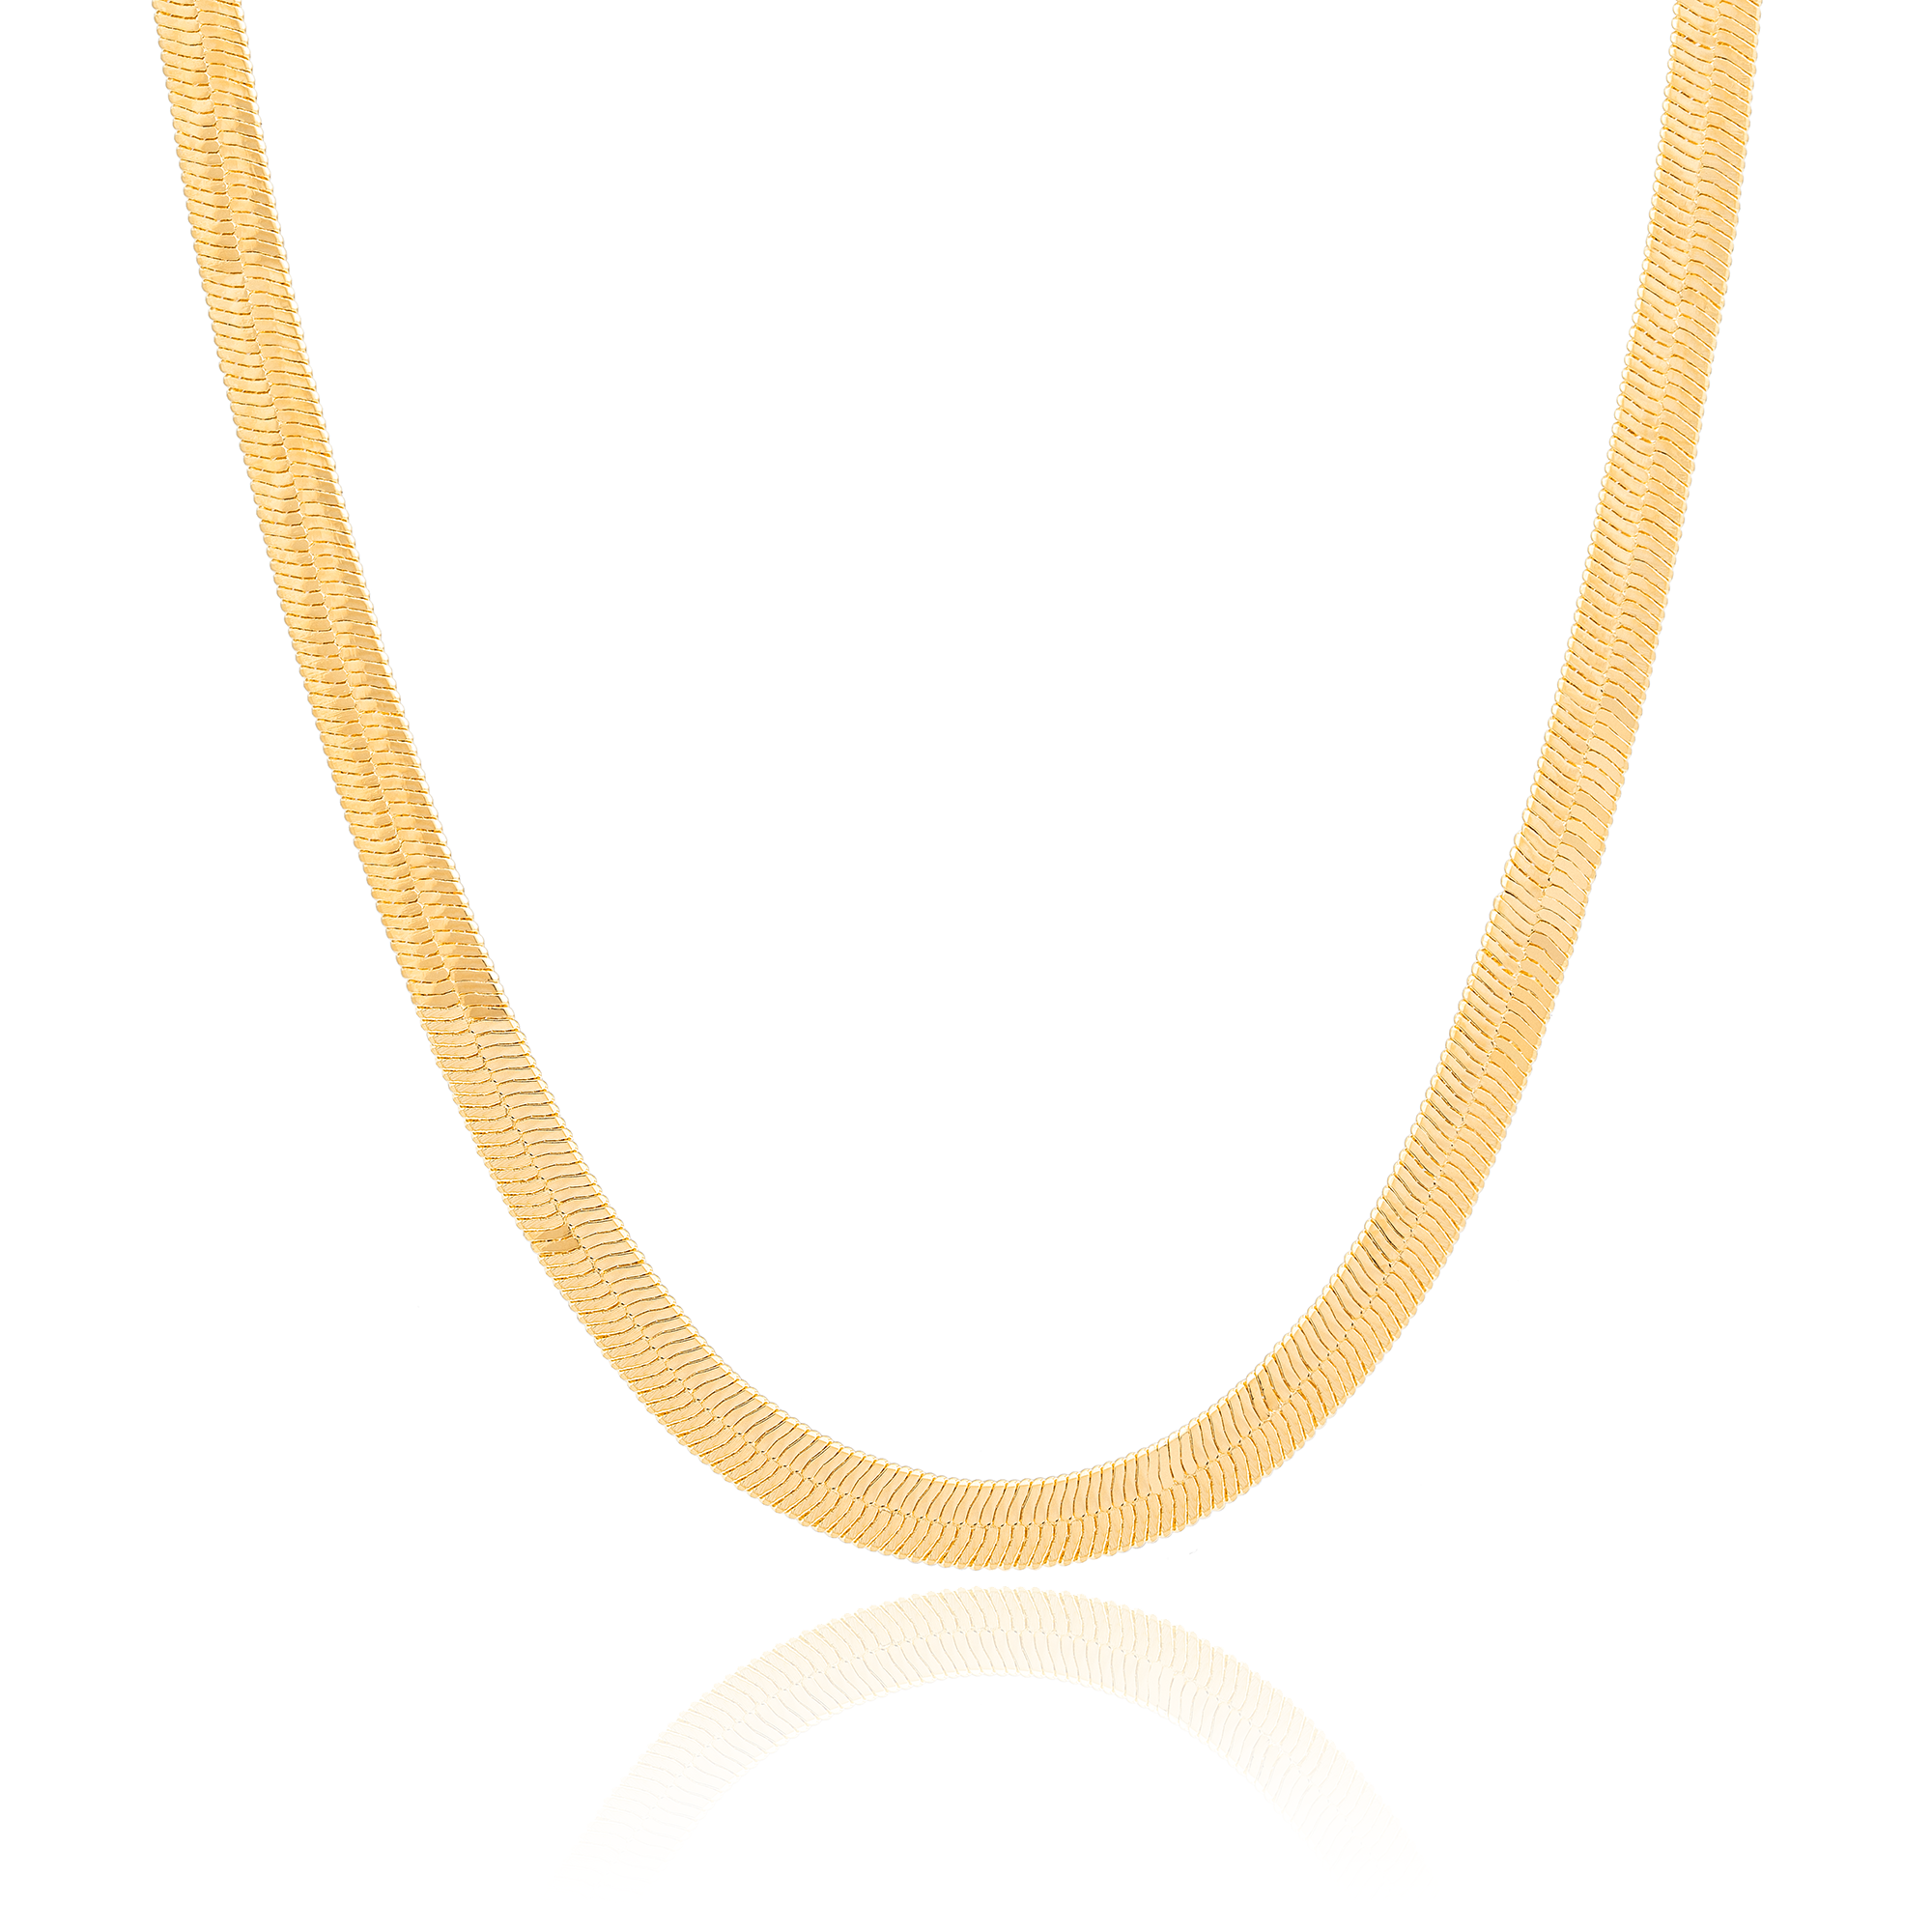 Natalia gold herringbone necklace - thick chain - 1